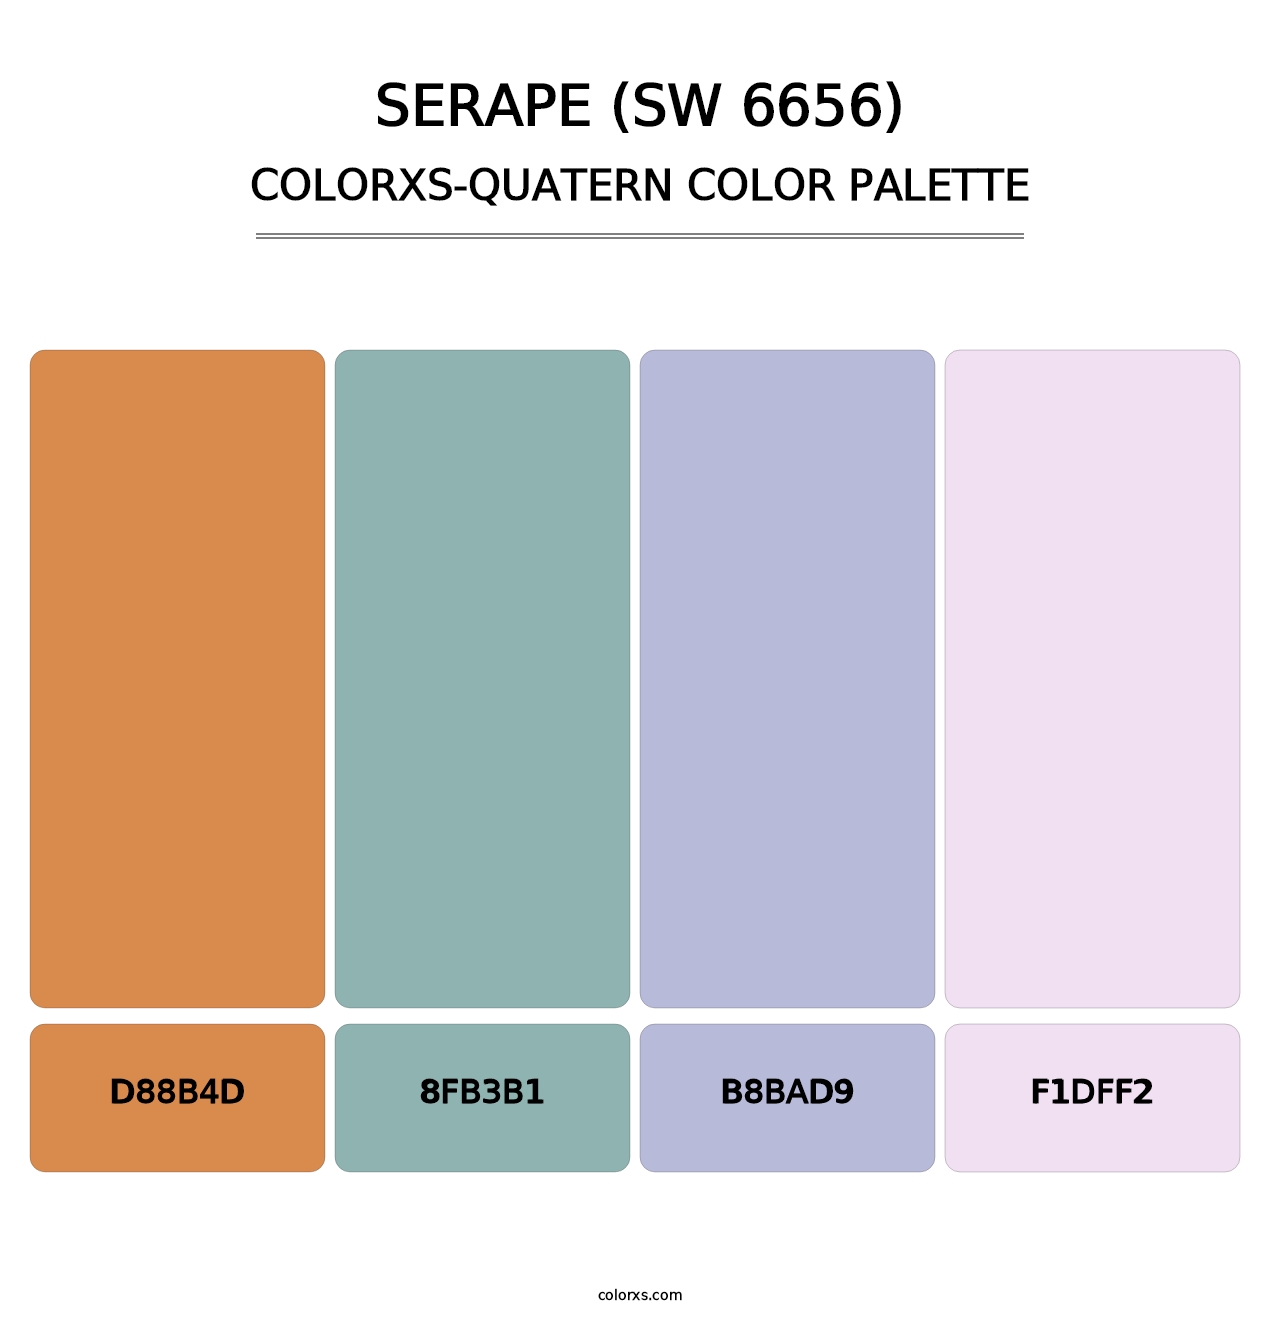 Serape (SW 6656) - Colorxs Quatern Palette